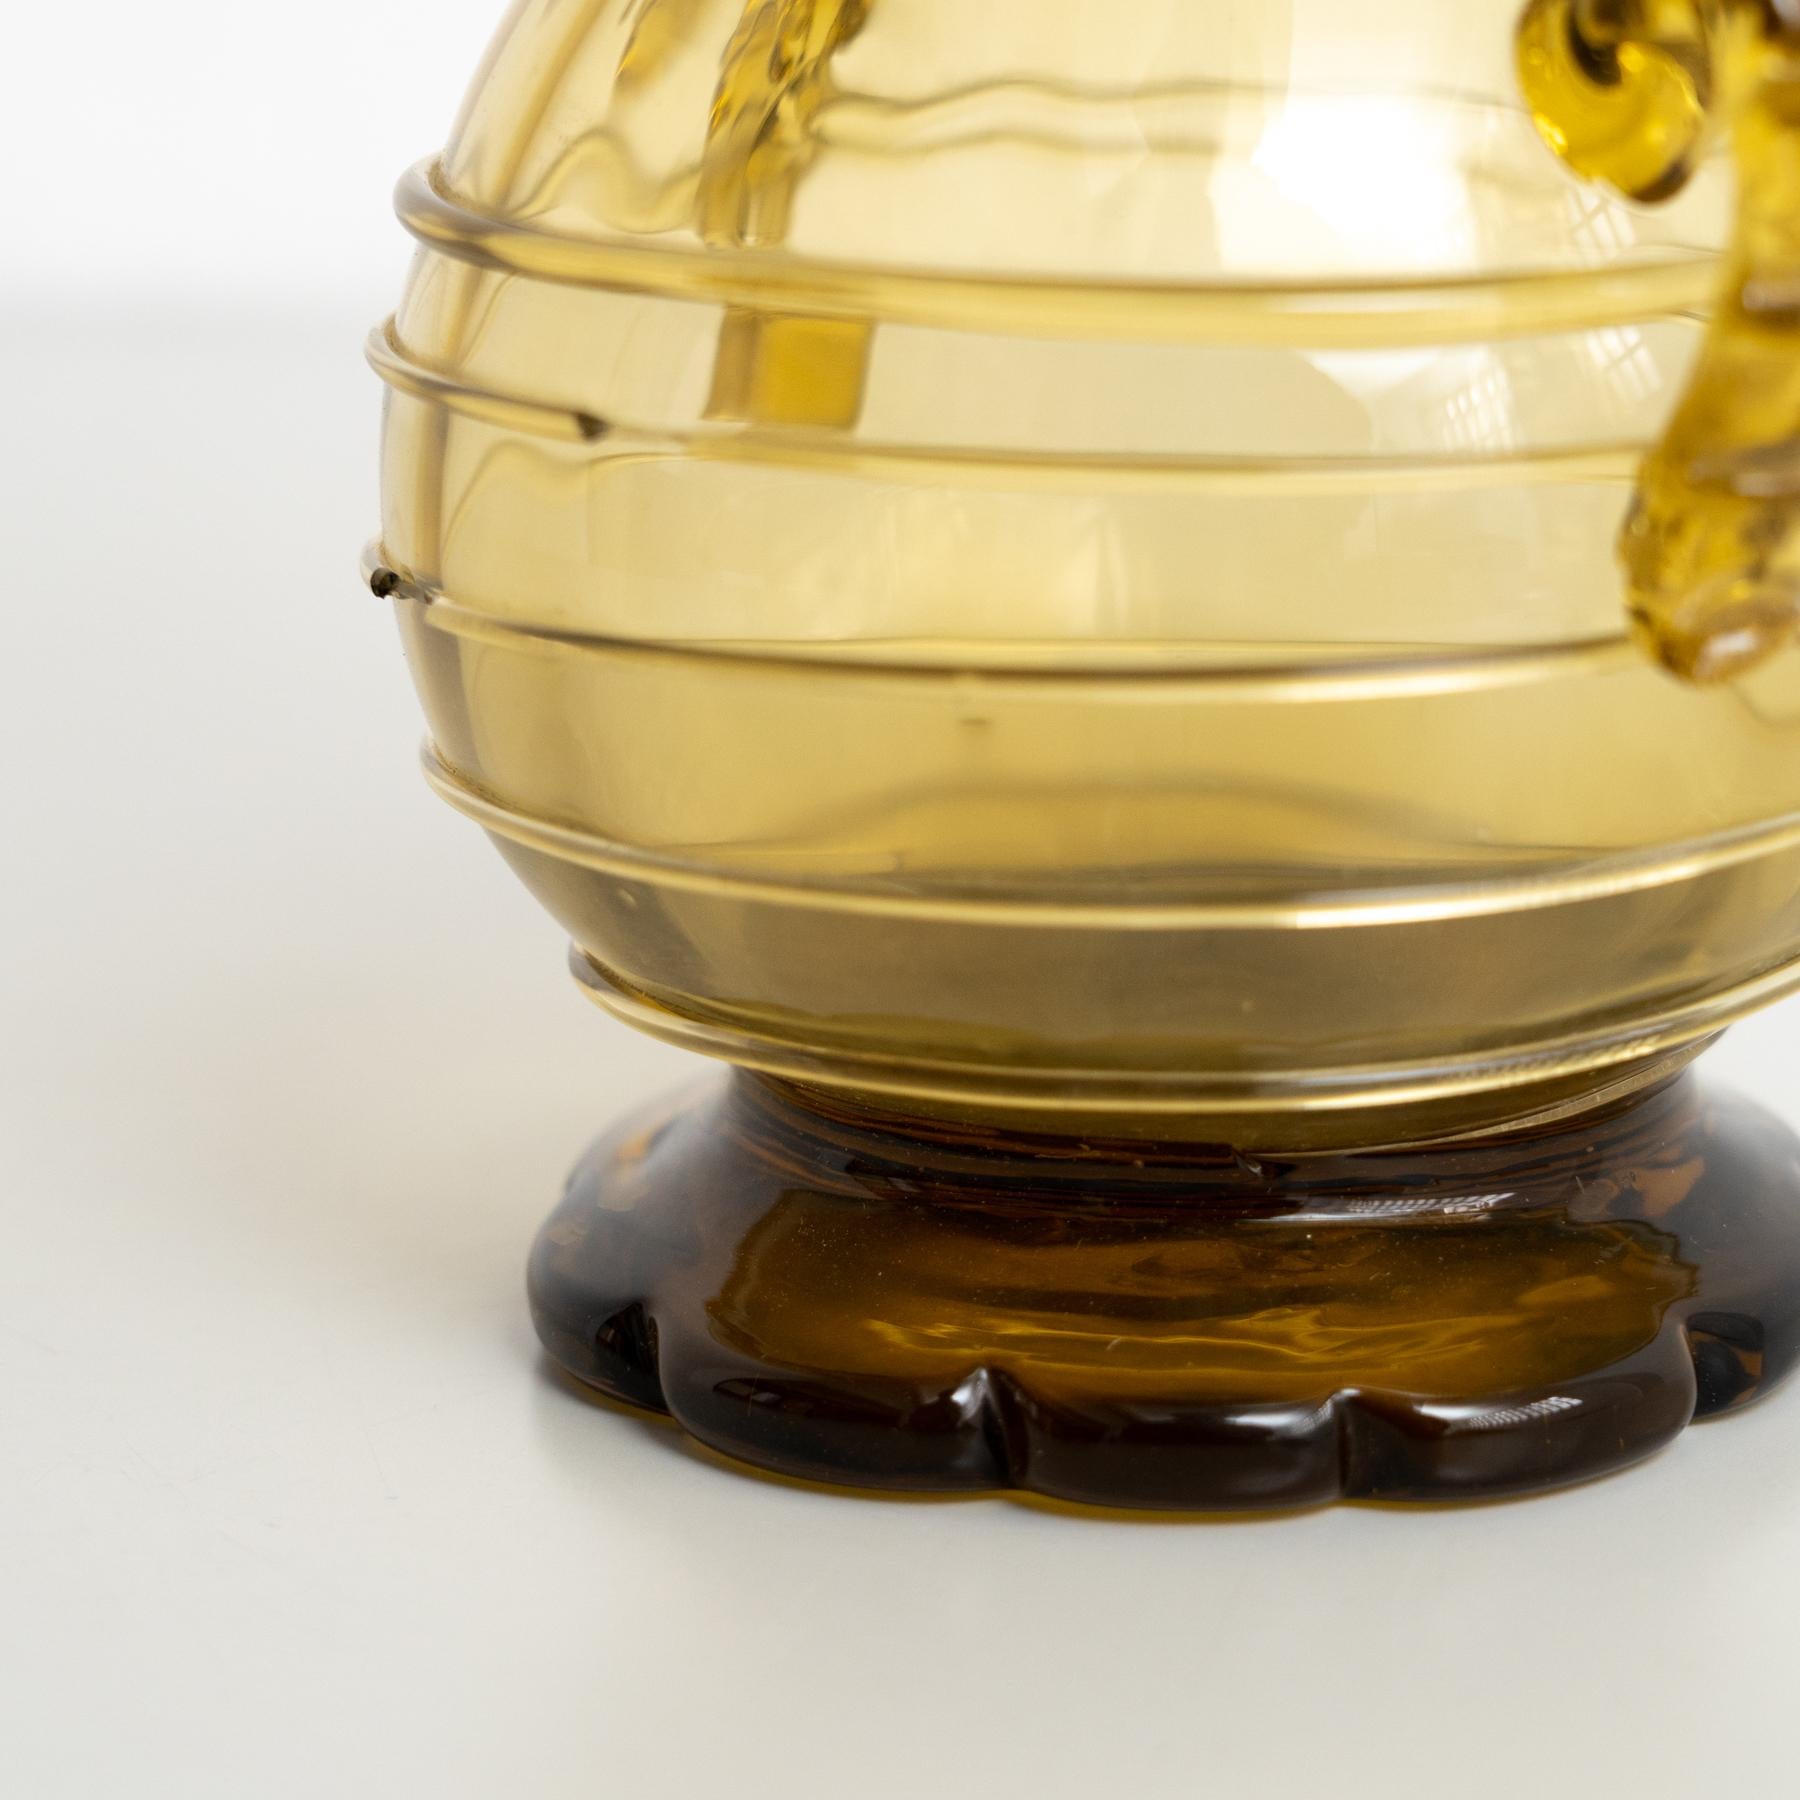 Elegant Amber Blown Glass Vase - Early 20th Century Spanish Artistry For Sale 8